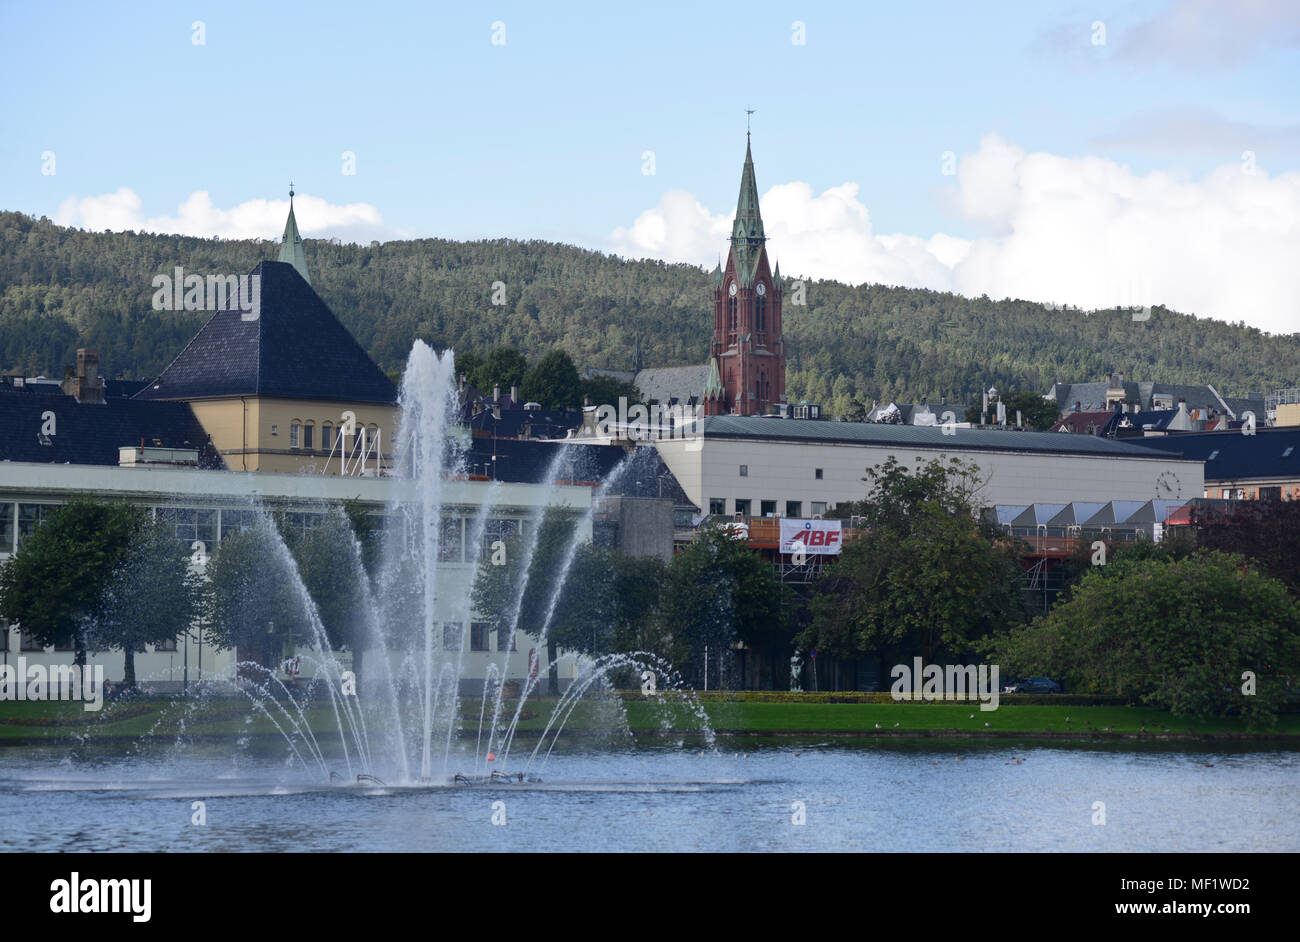 Lille Lungegrdsvannet and Saint John's Church, Bergen, Norway Stock Photo